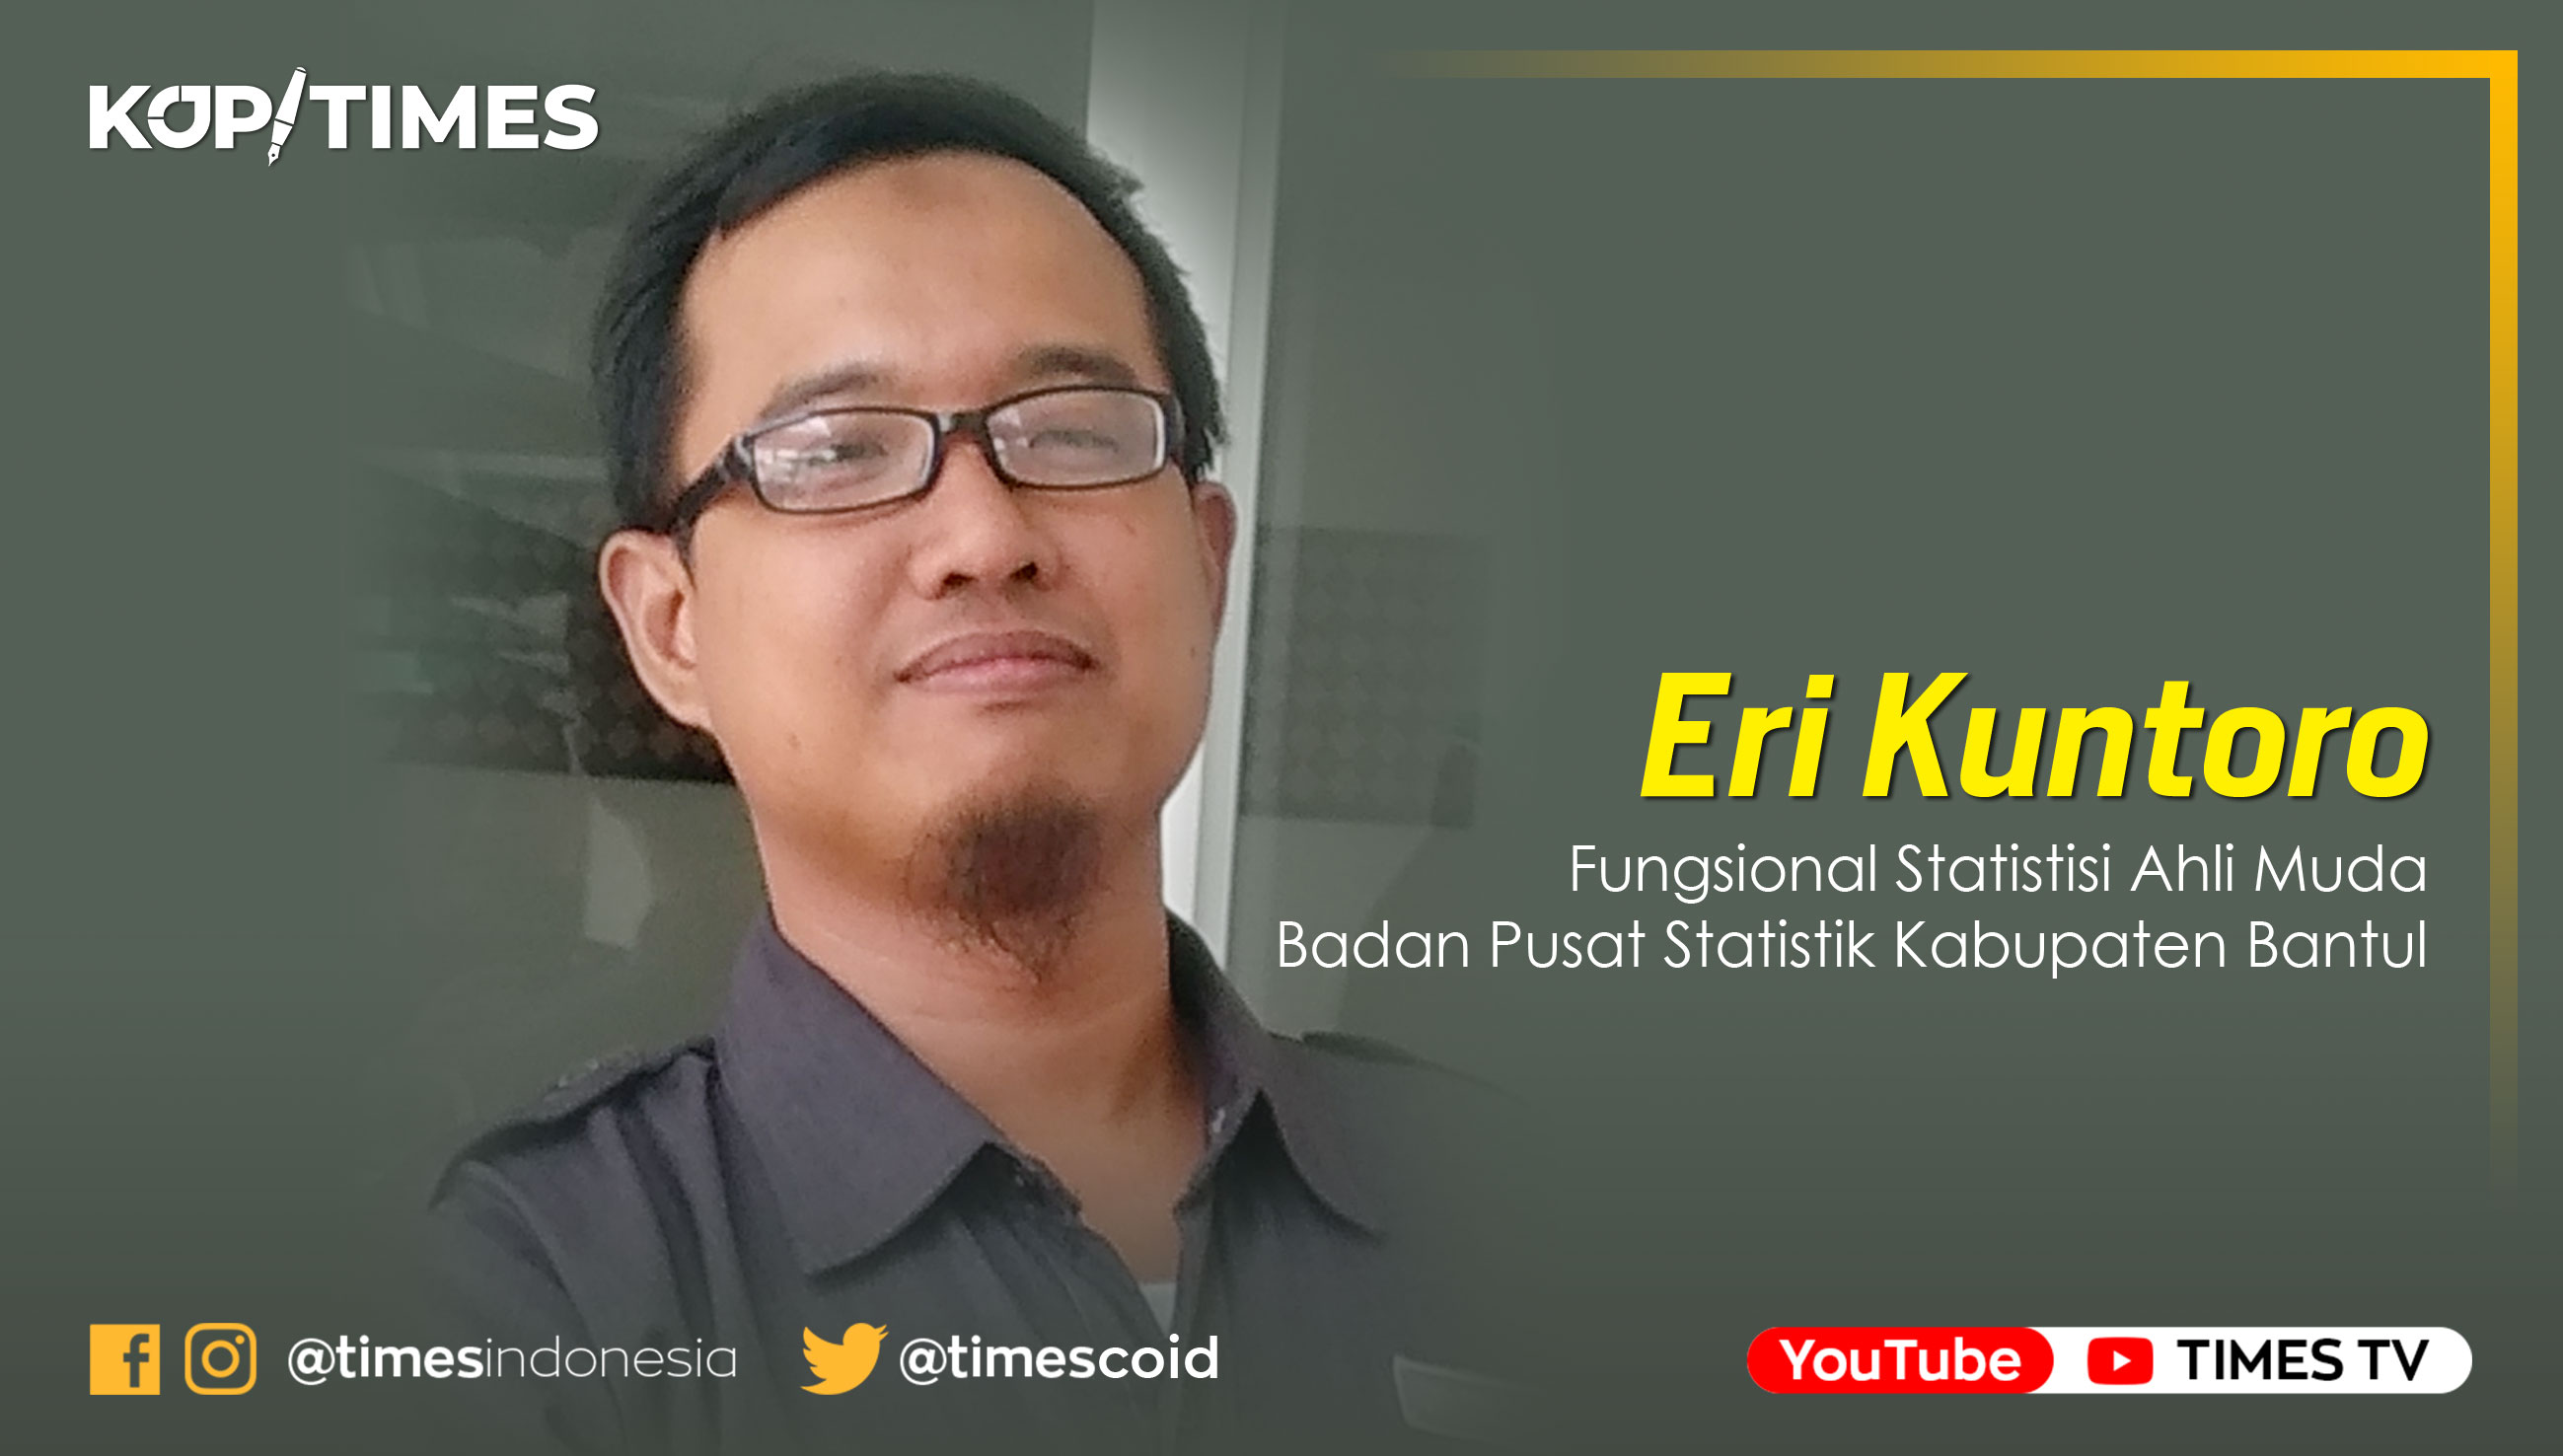 Eri Kuntoro, SST, M.Si, Fungsional Statistisi Ahli Muda, Badan Pusat Statistik Kabupaten Bantul.